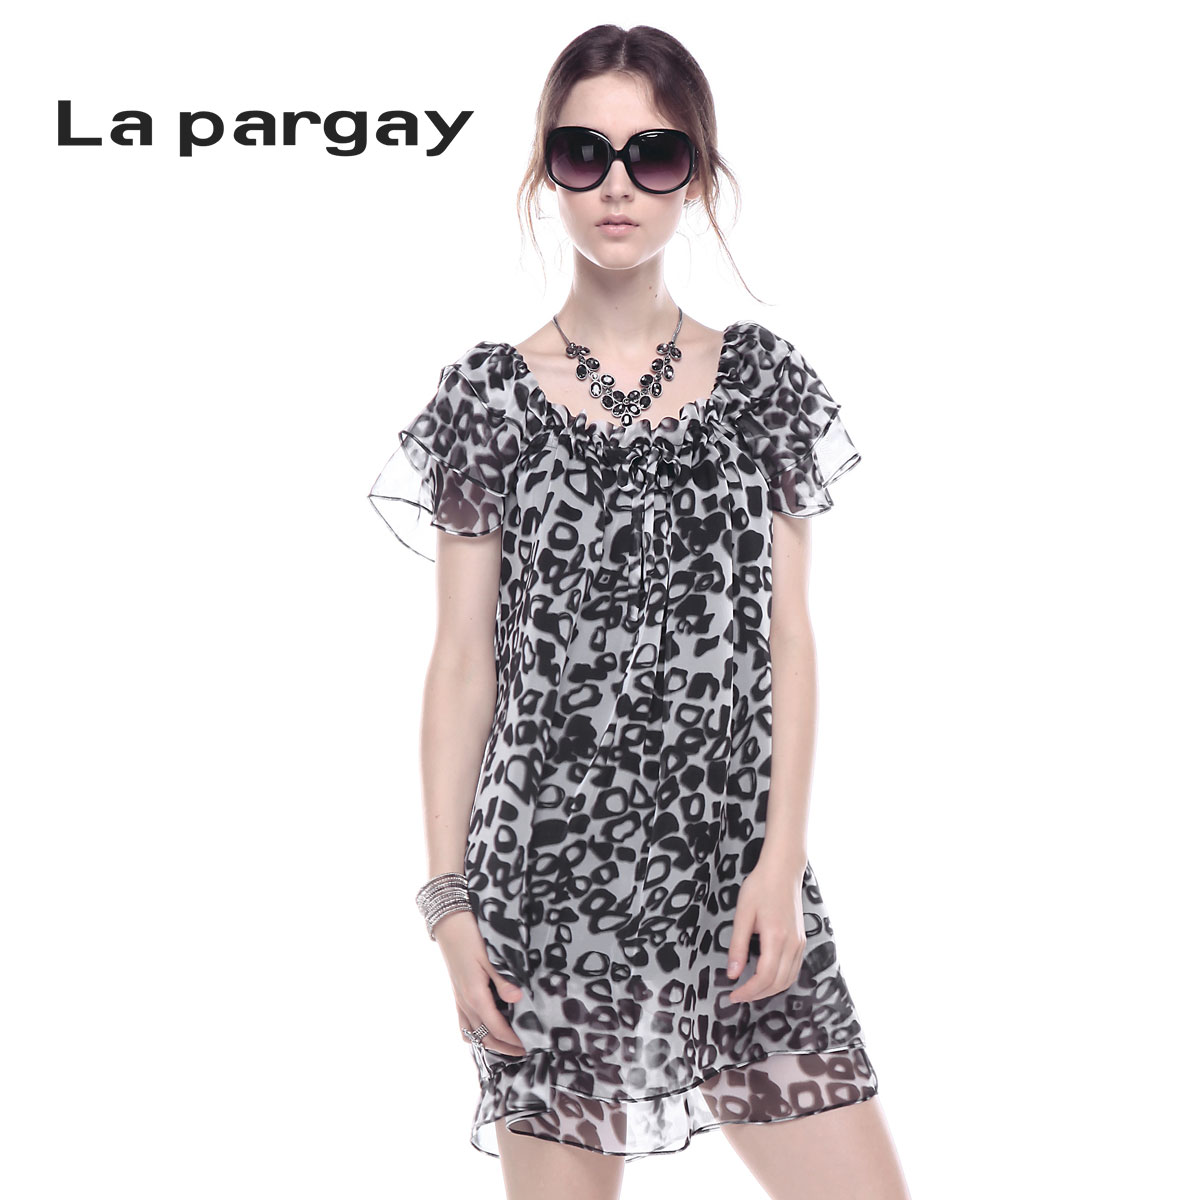 La pargay夏季中长裙短袖新款单件女装方领打底中腰连身裙连衣裙